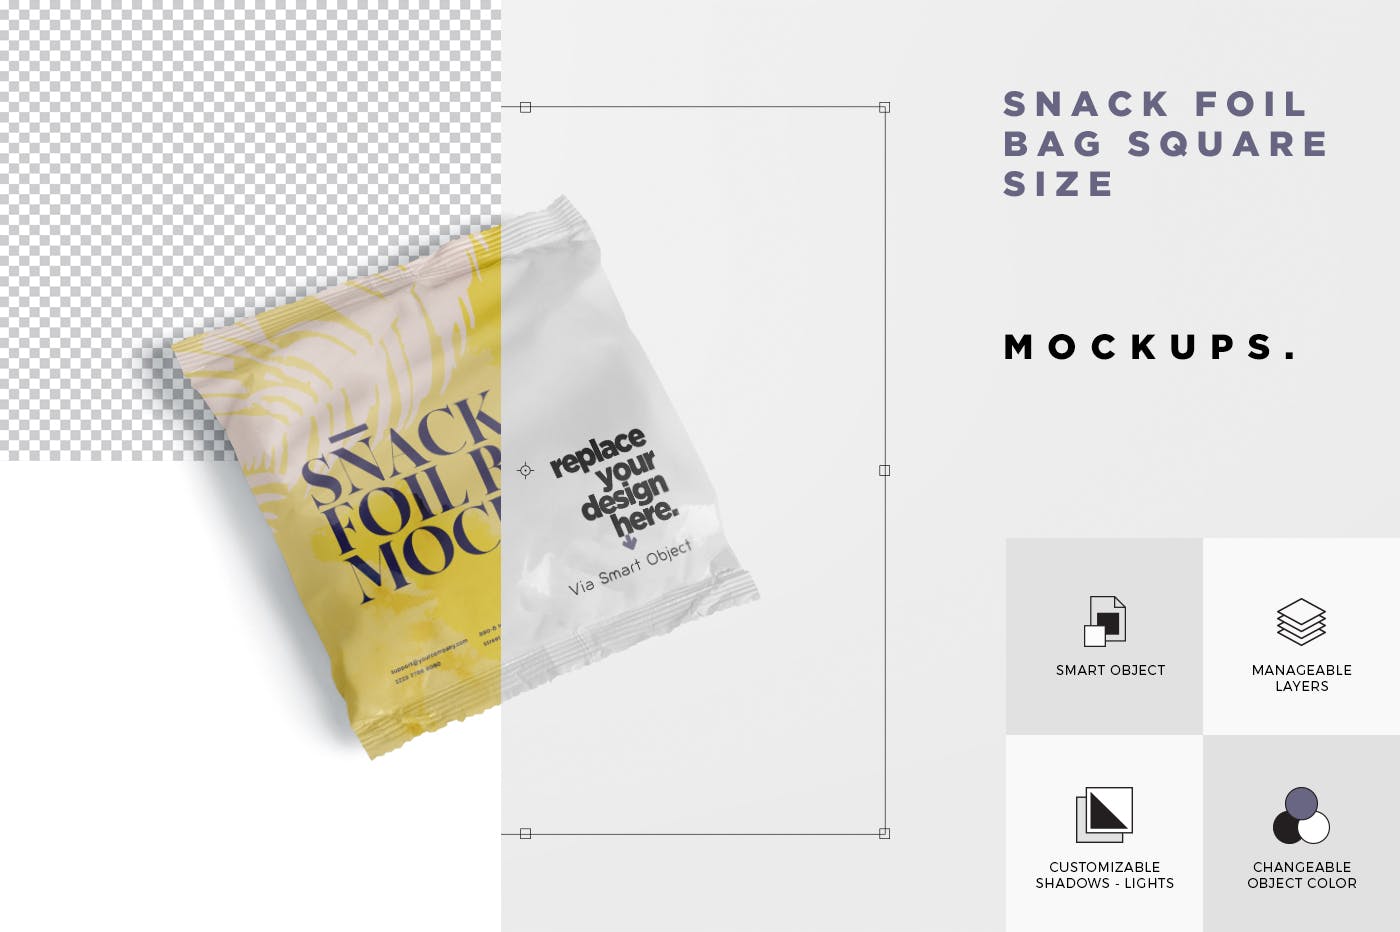 小吃零食铝箔包装袋设计图第一素材精选 Snack Foil Bag Mockup – Square Size – Small插图(6)